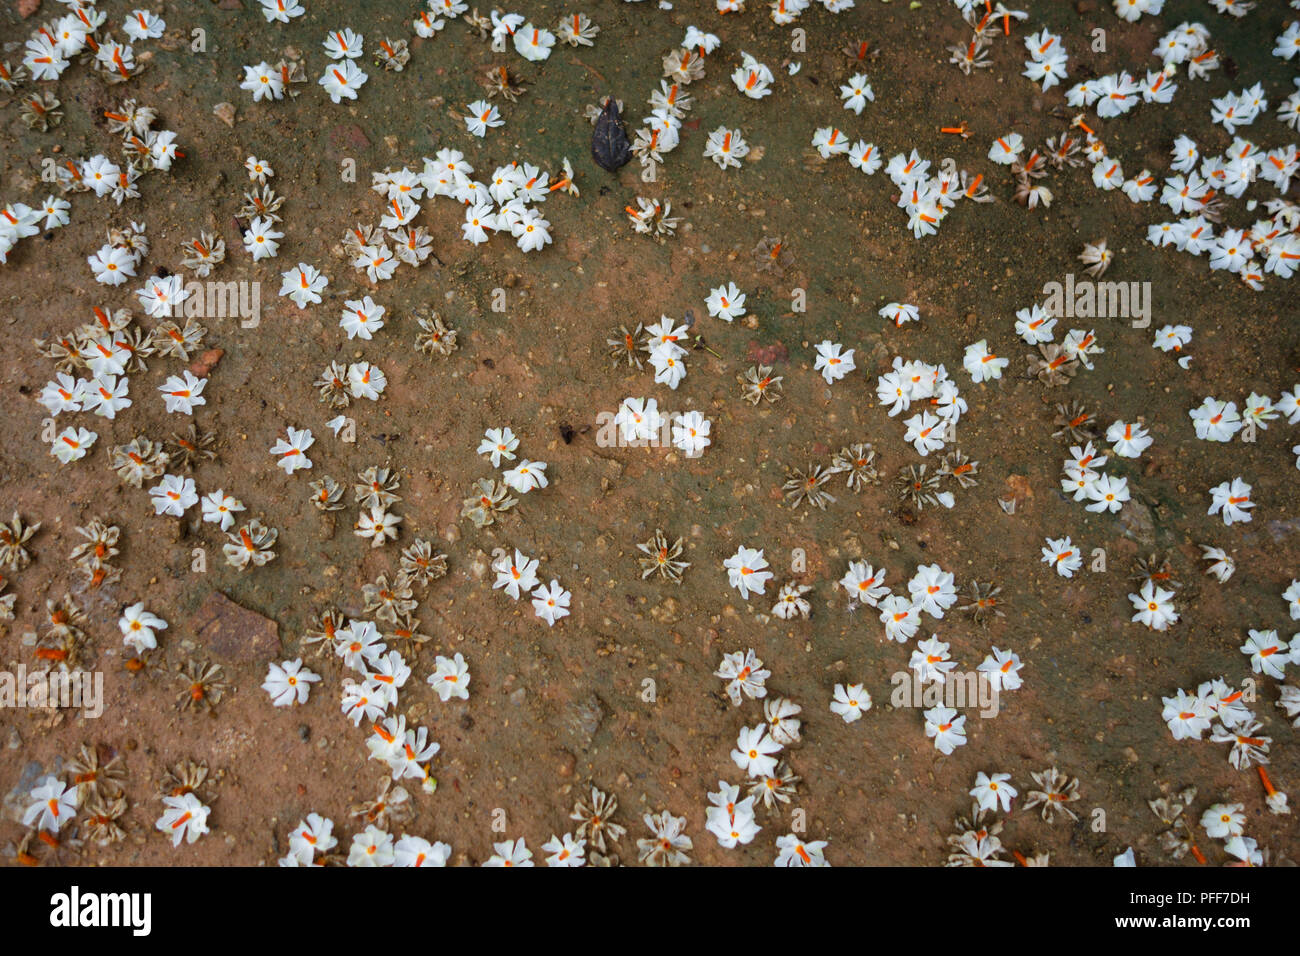 Fallen night-flowering jasmine flowers on the ground Stock Photo